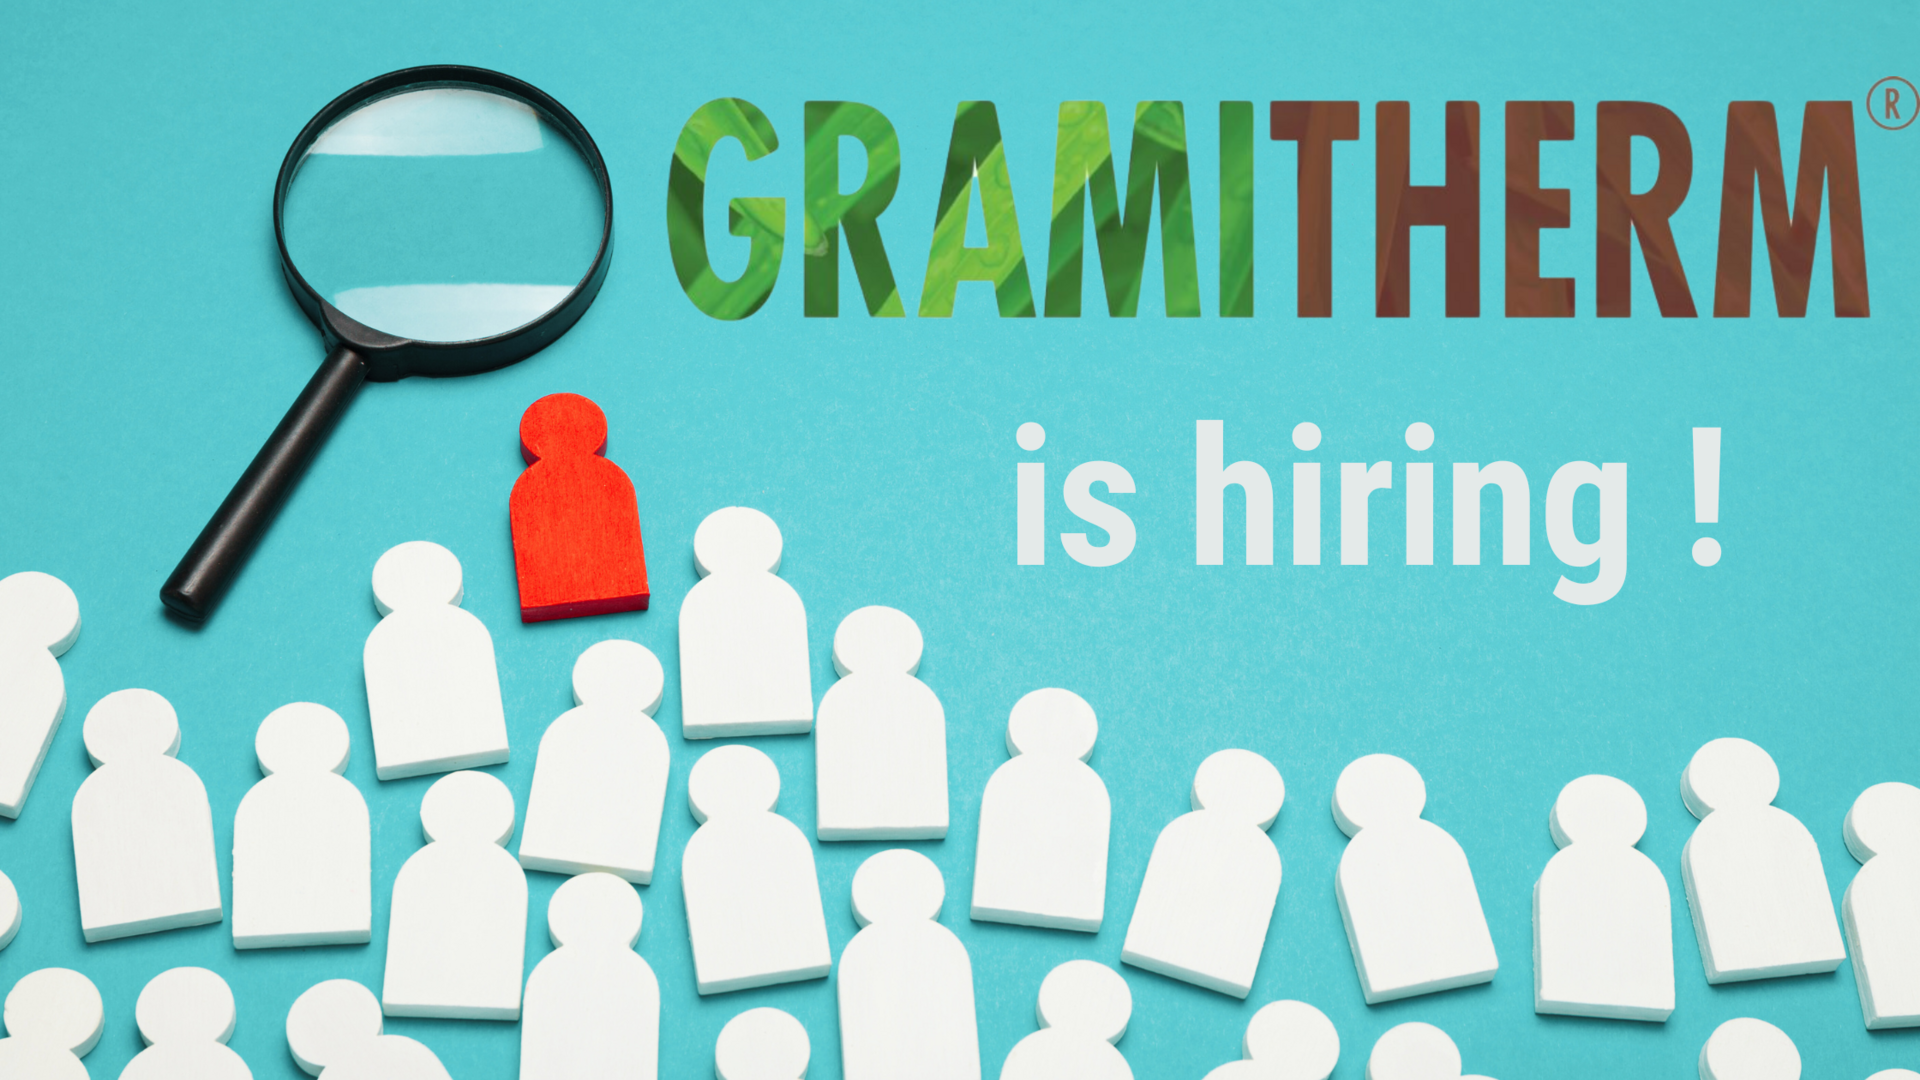 GreenWin's Member GRAMITHERM is hiring